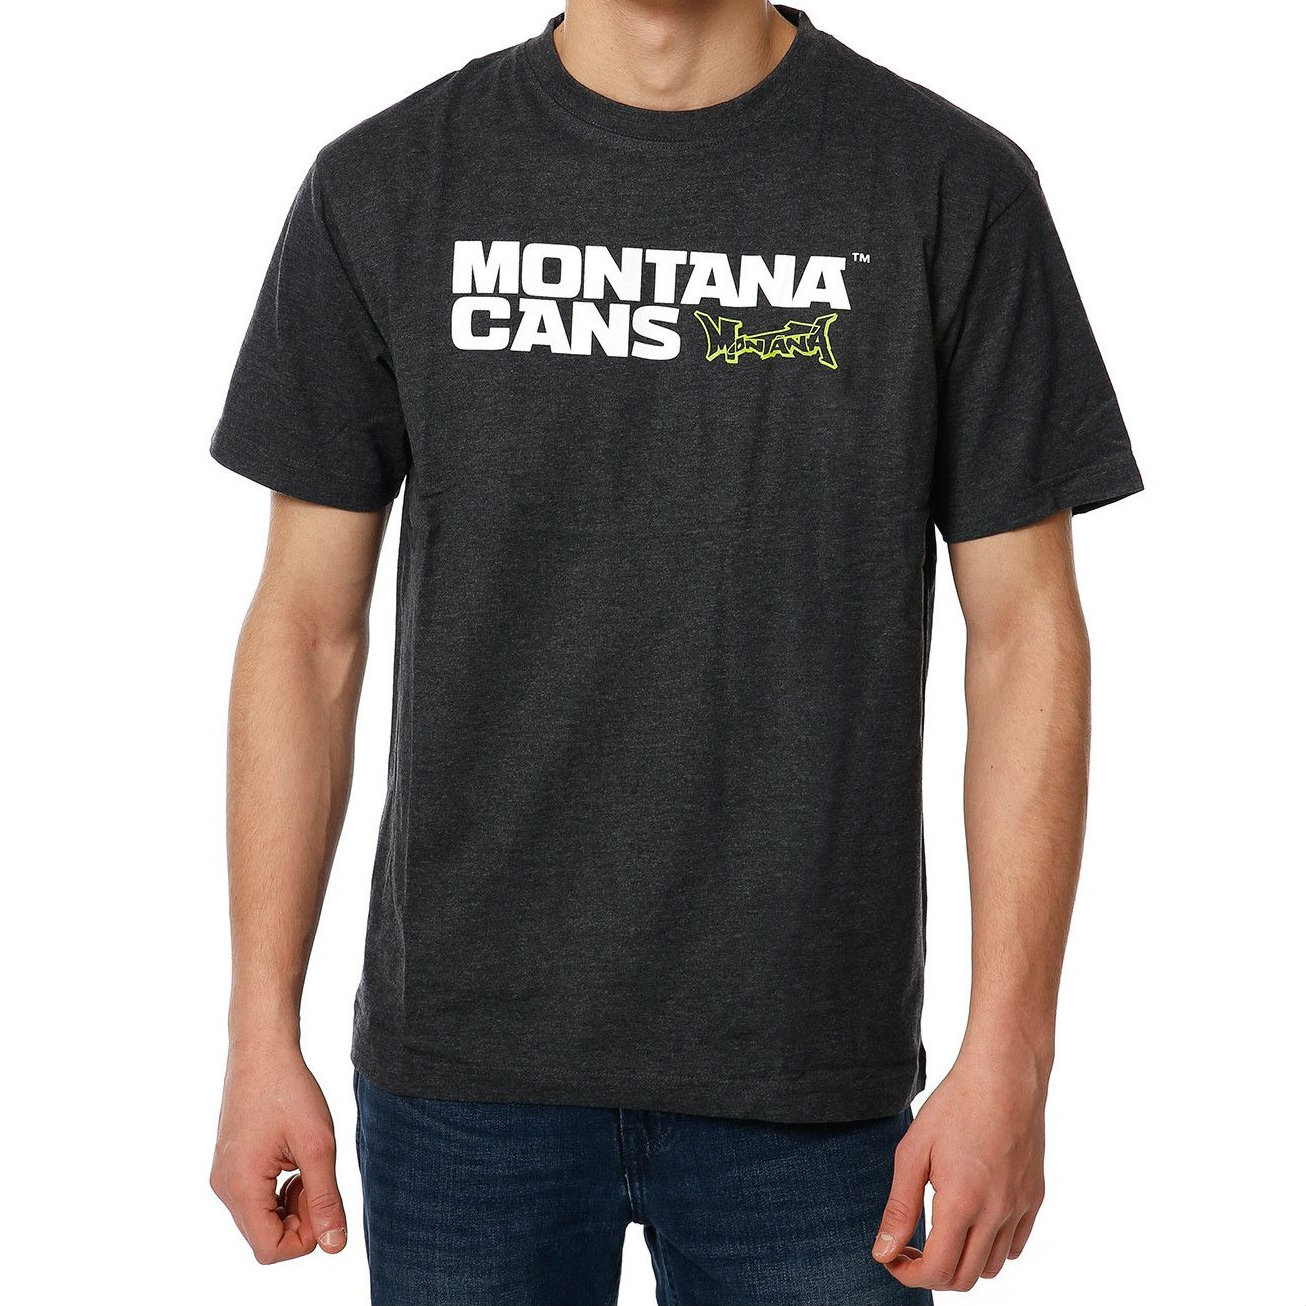 Montana cans. Футболка Монтана Кенс. Montana cans одежда. Montana cans майка. Кофта Montana cans.